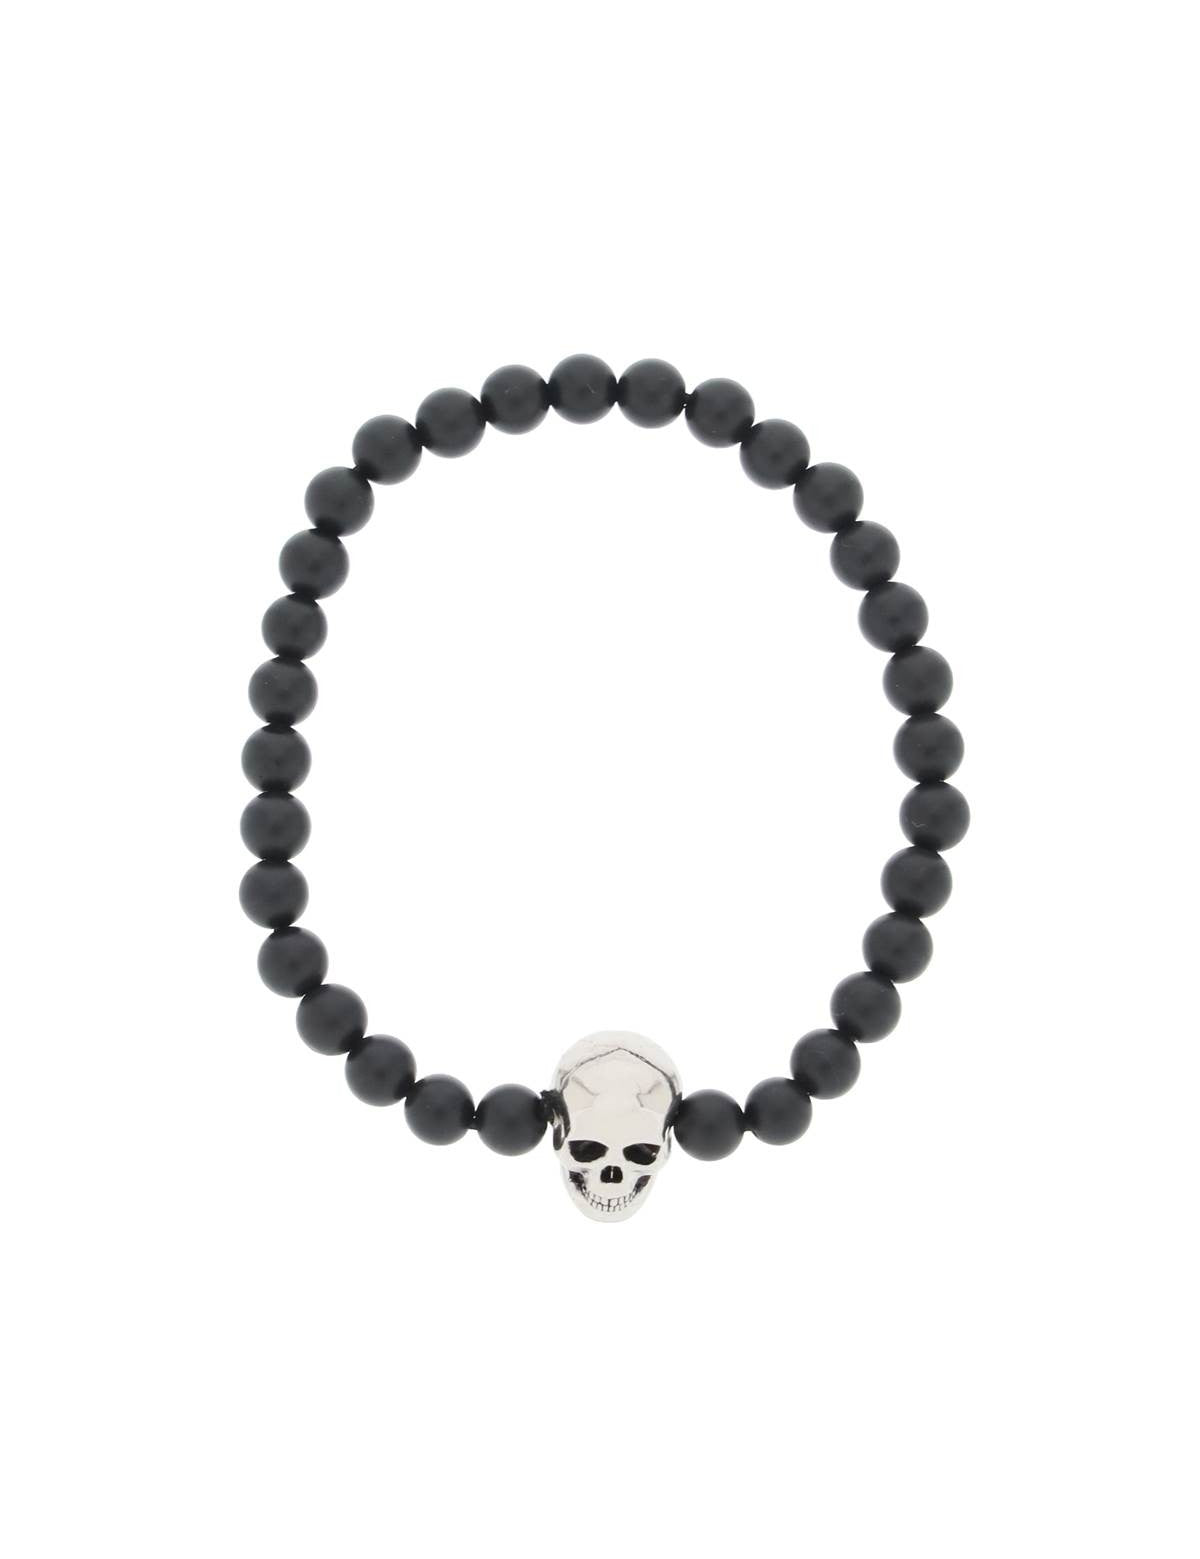 alexander-mcqueen-skull-bracelet-with-pearls_ca07513e-962c-4edf-a08c-f7534ef4d96e.jpg